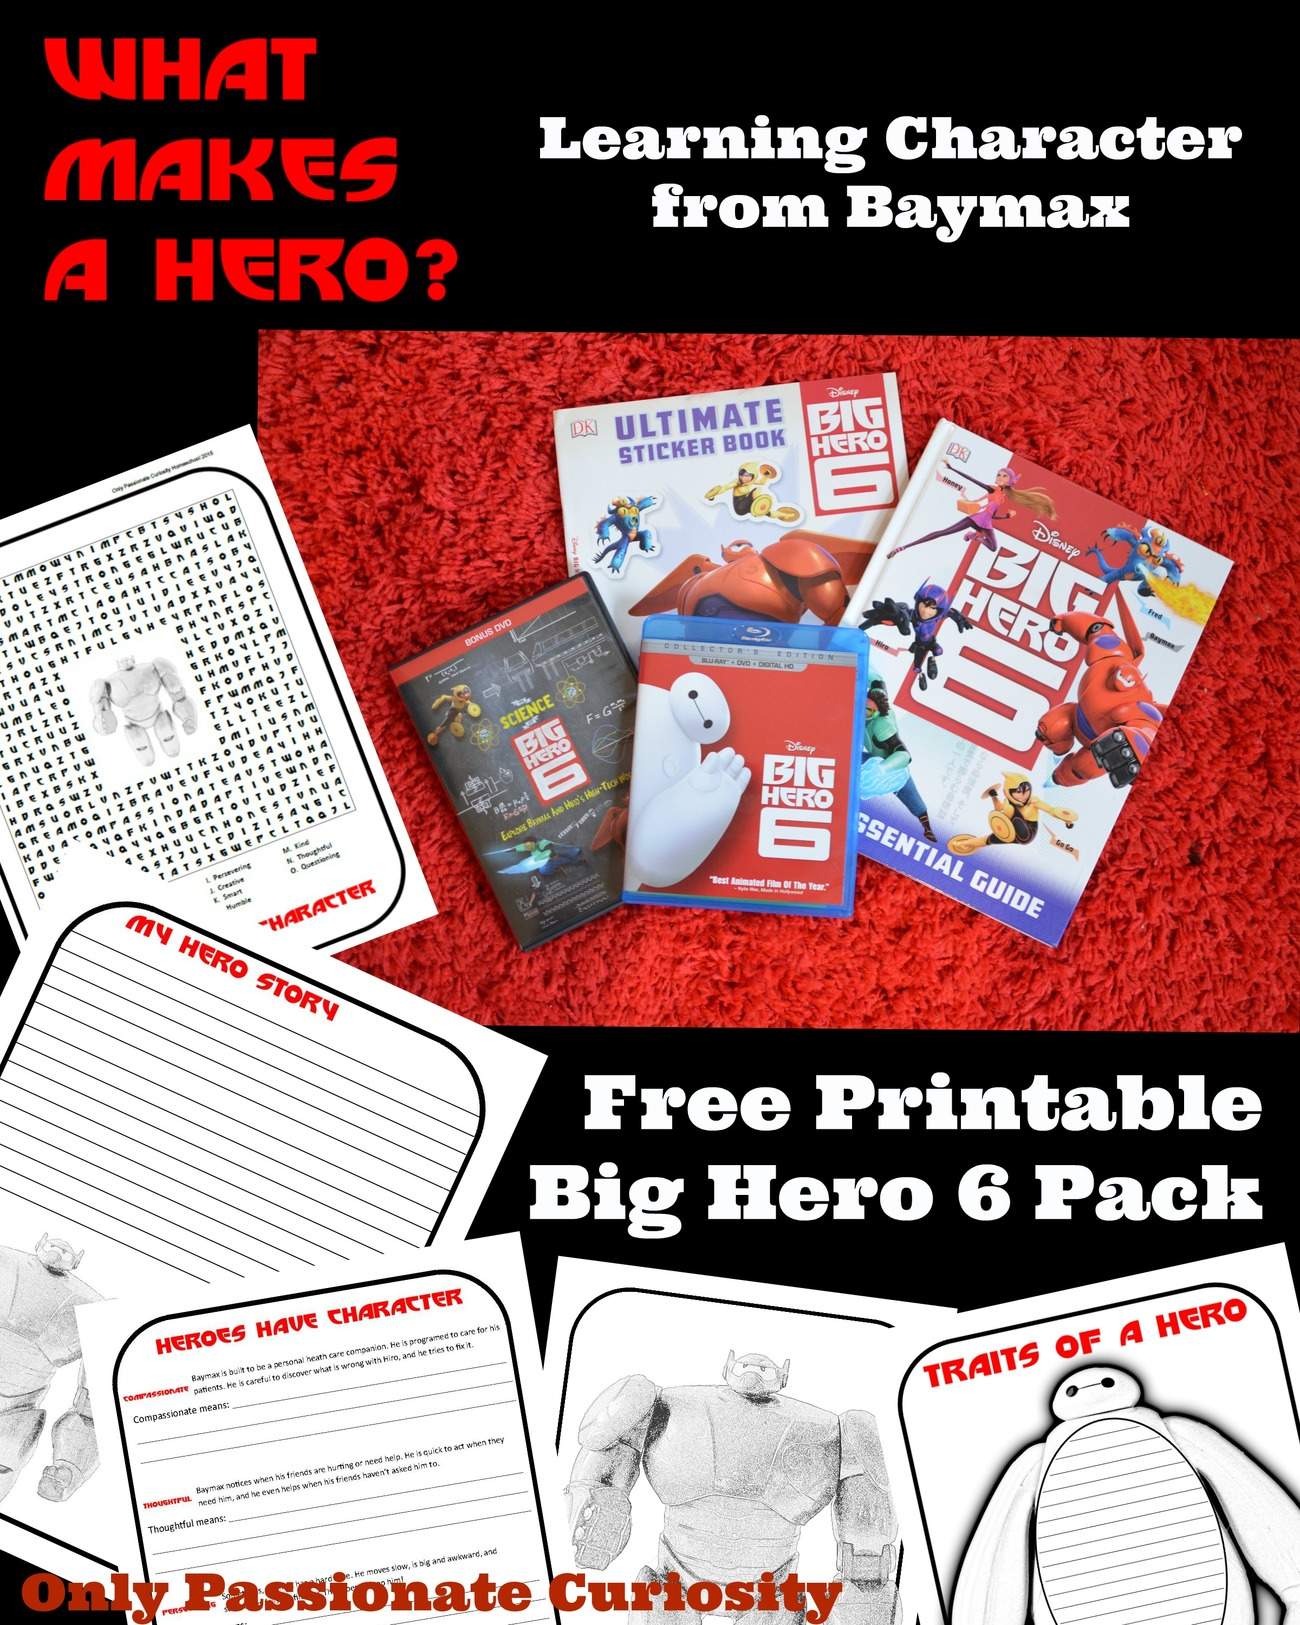 What Makes a Hero? Free Big Hero 6 Printable Pack